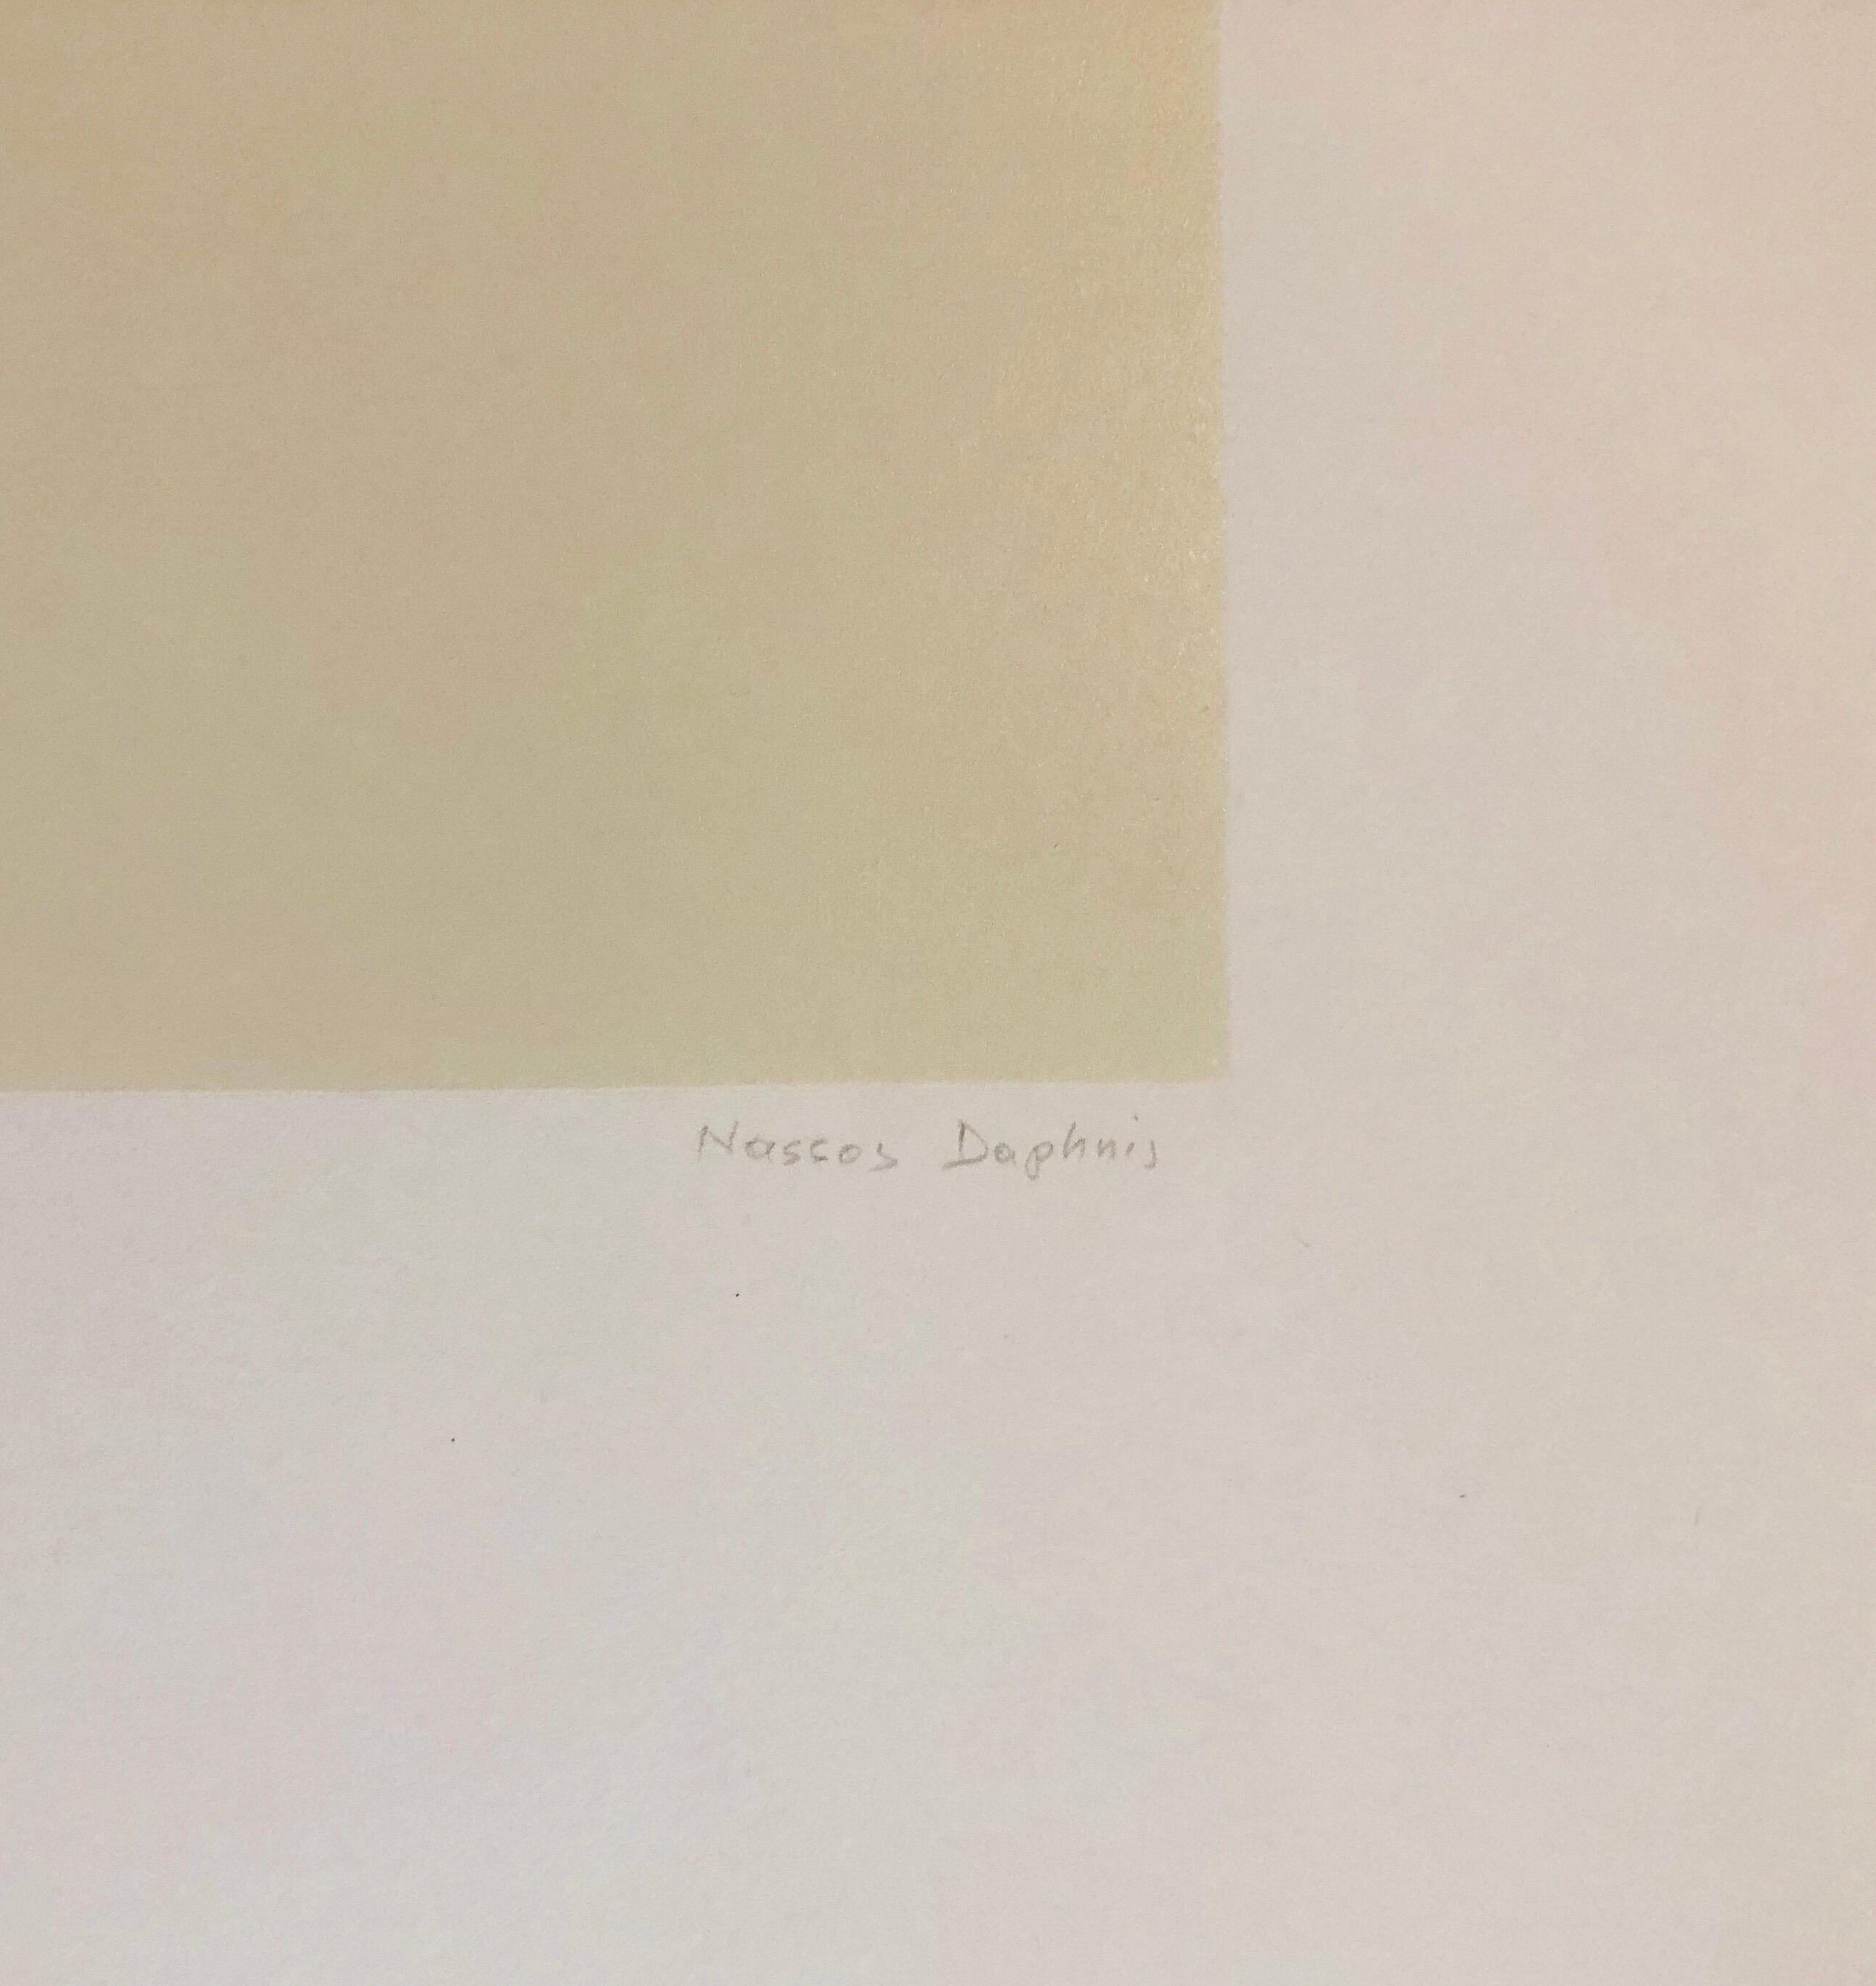 Nassos Daphnis Hard Edged Geometric Abstract Minimalist Silkscreen Op Art Print 1